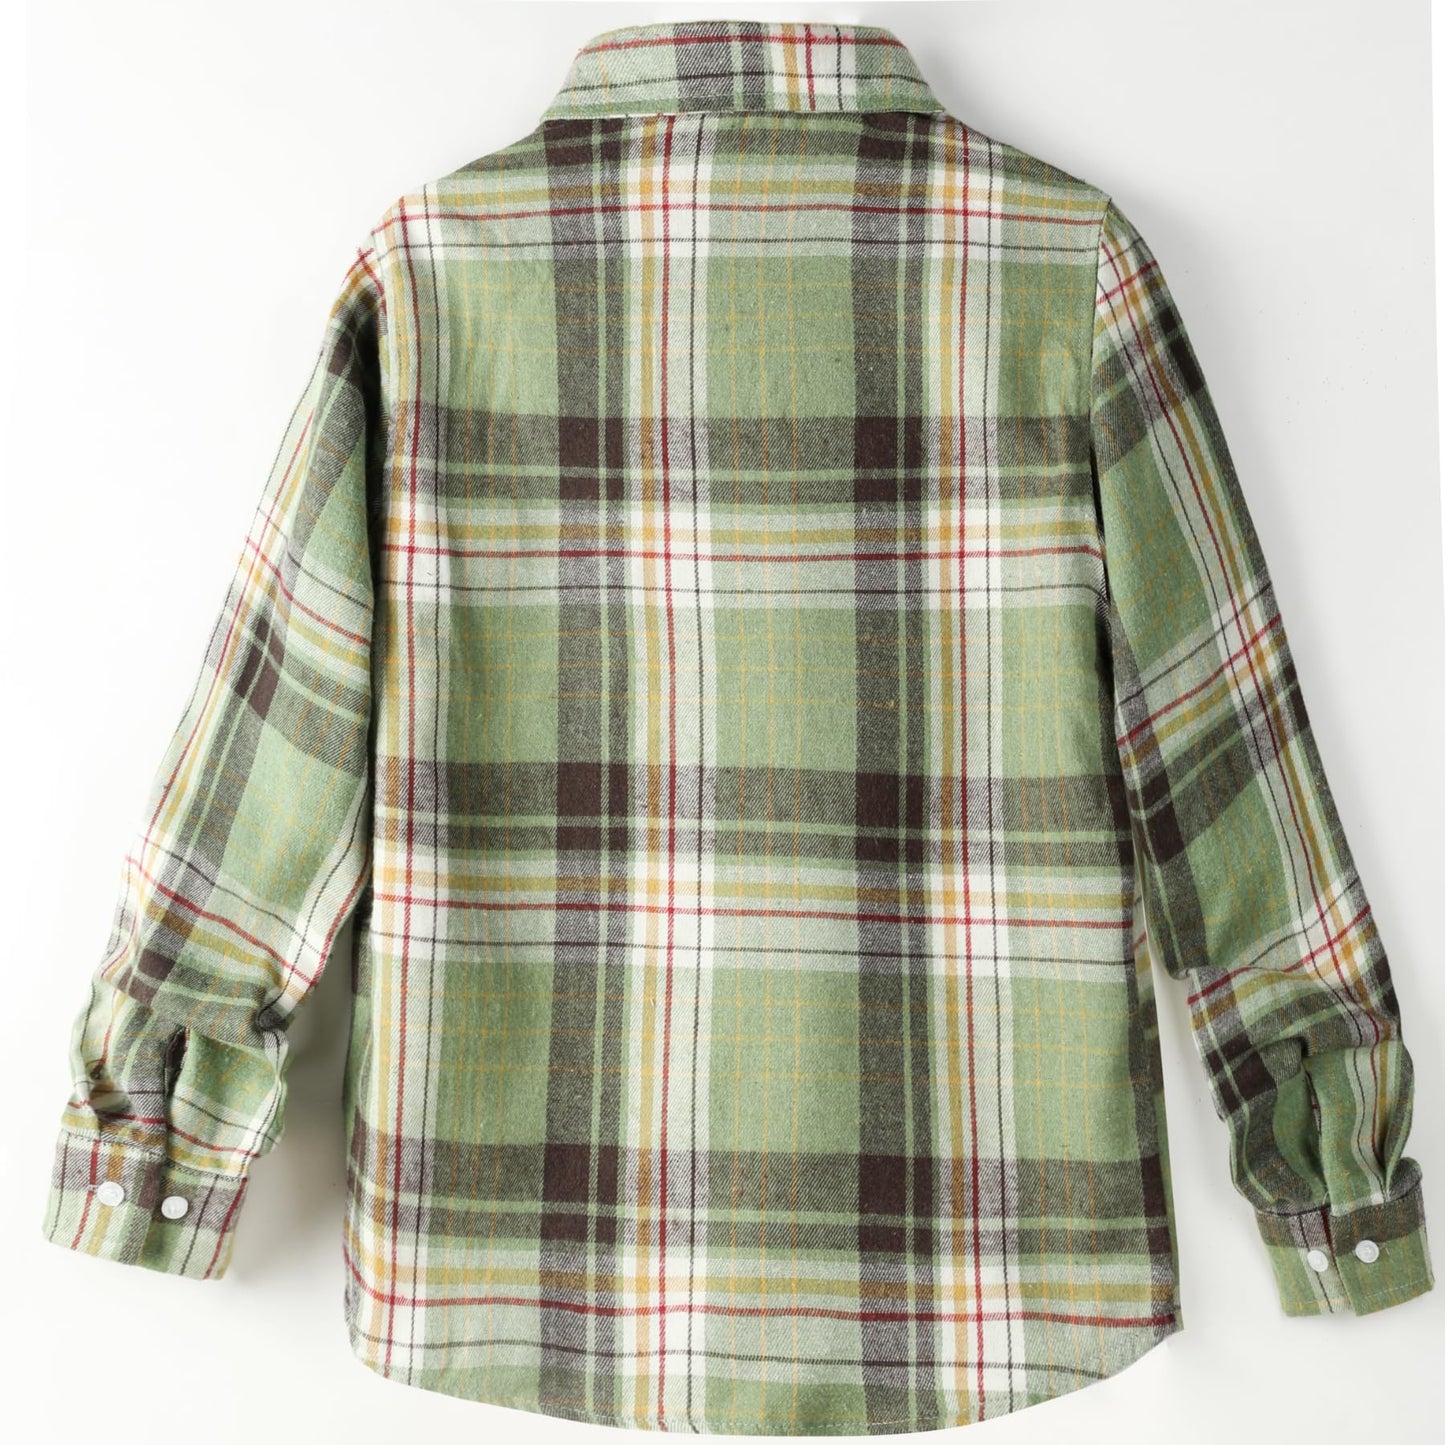 Aimehonpe Kids Boys Flannel Buffalo Plaid Long Sleeve Button Down Dress Shirt